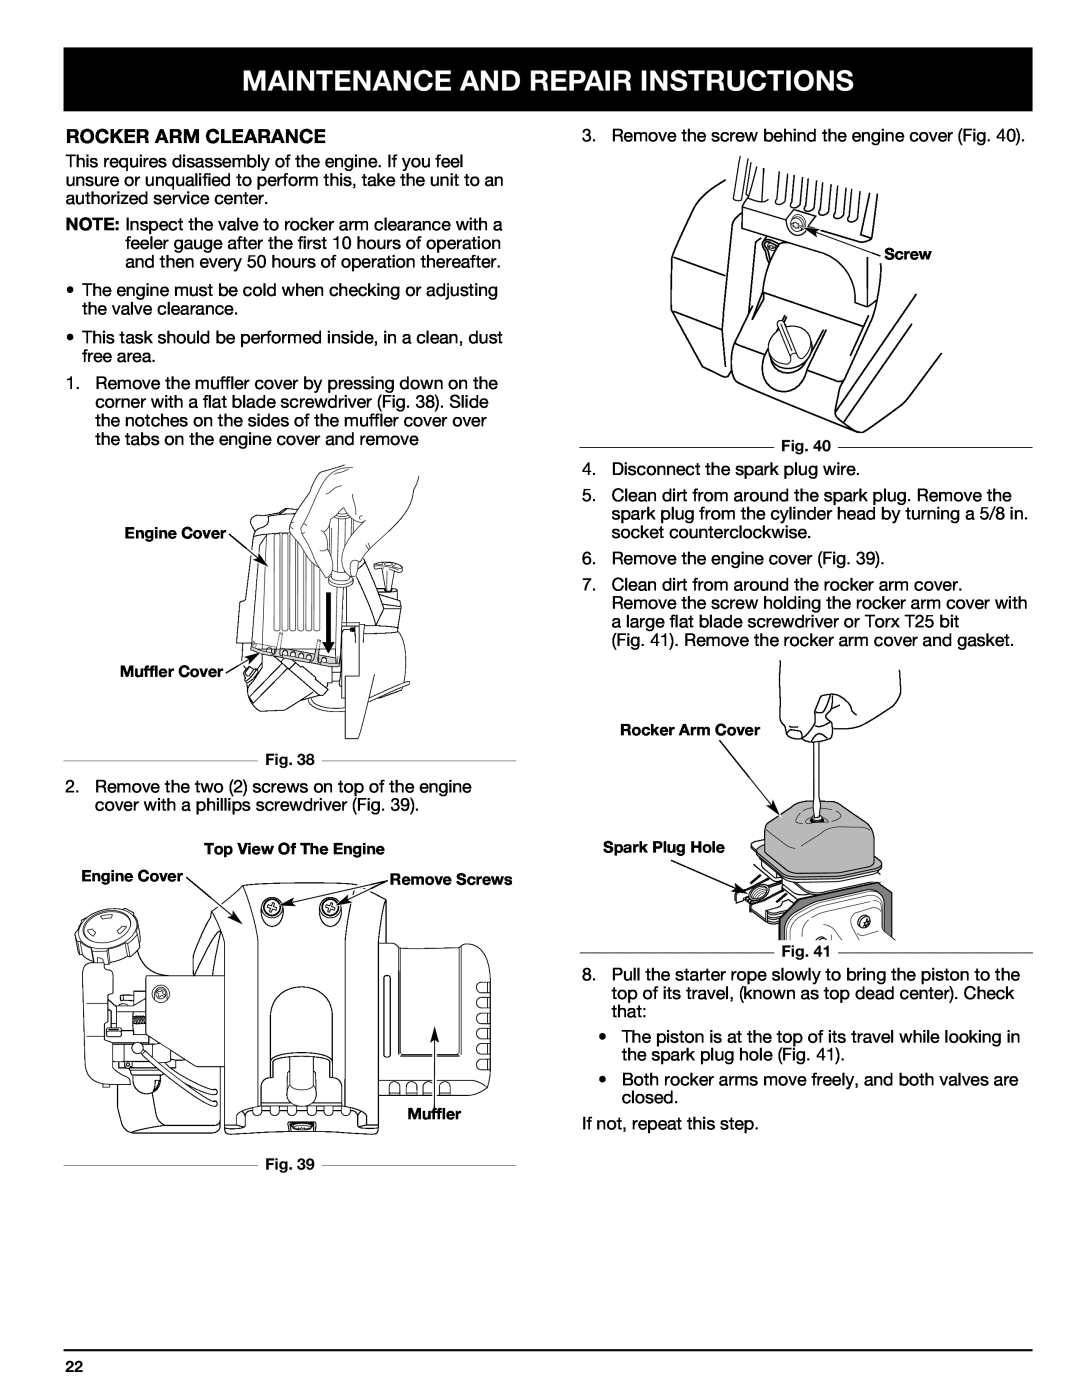 Ryobi Outdoor 875r manual Rocker Arm Clearance, Maintenance And Repair Instructions 